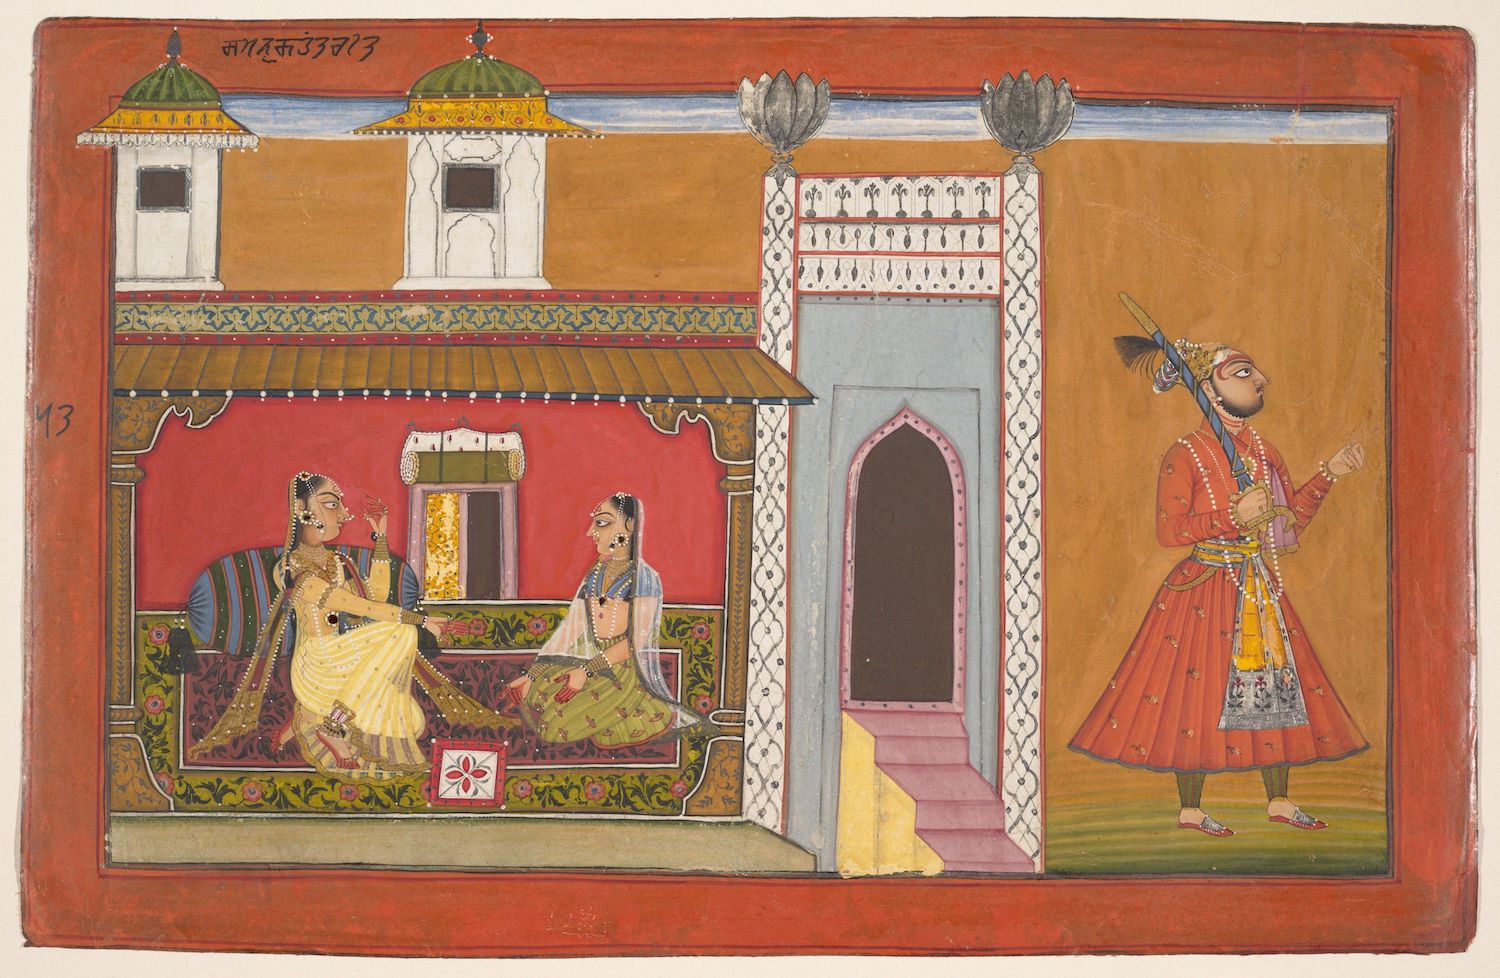 Attributed to Devidasa - 17th century